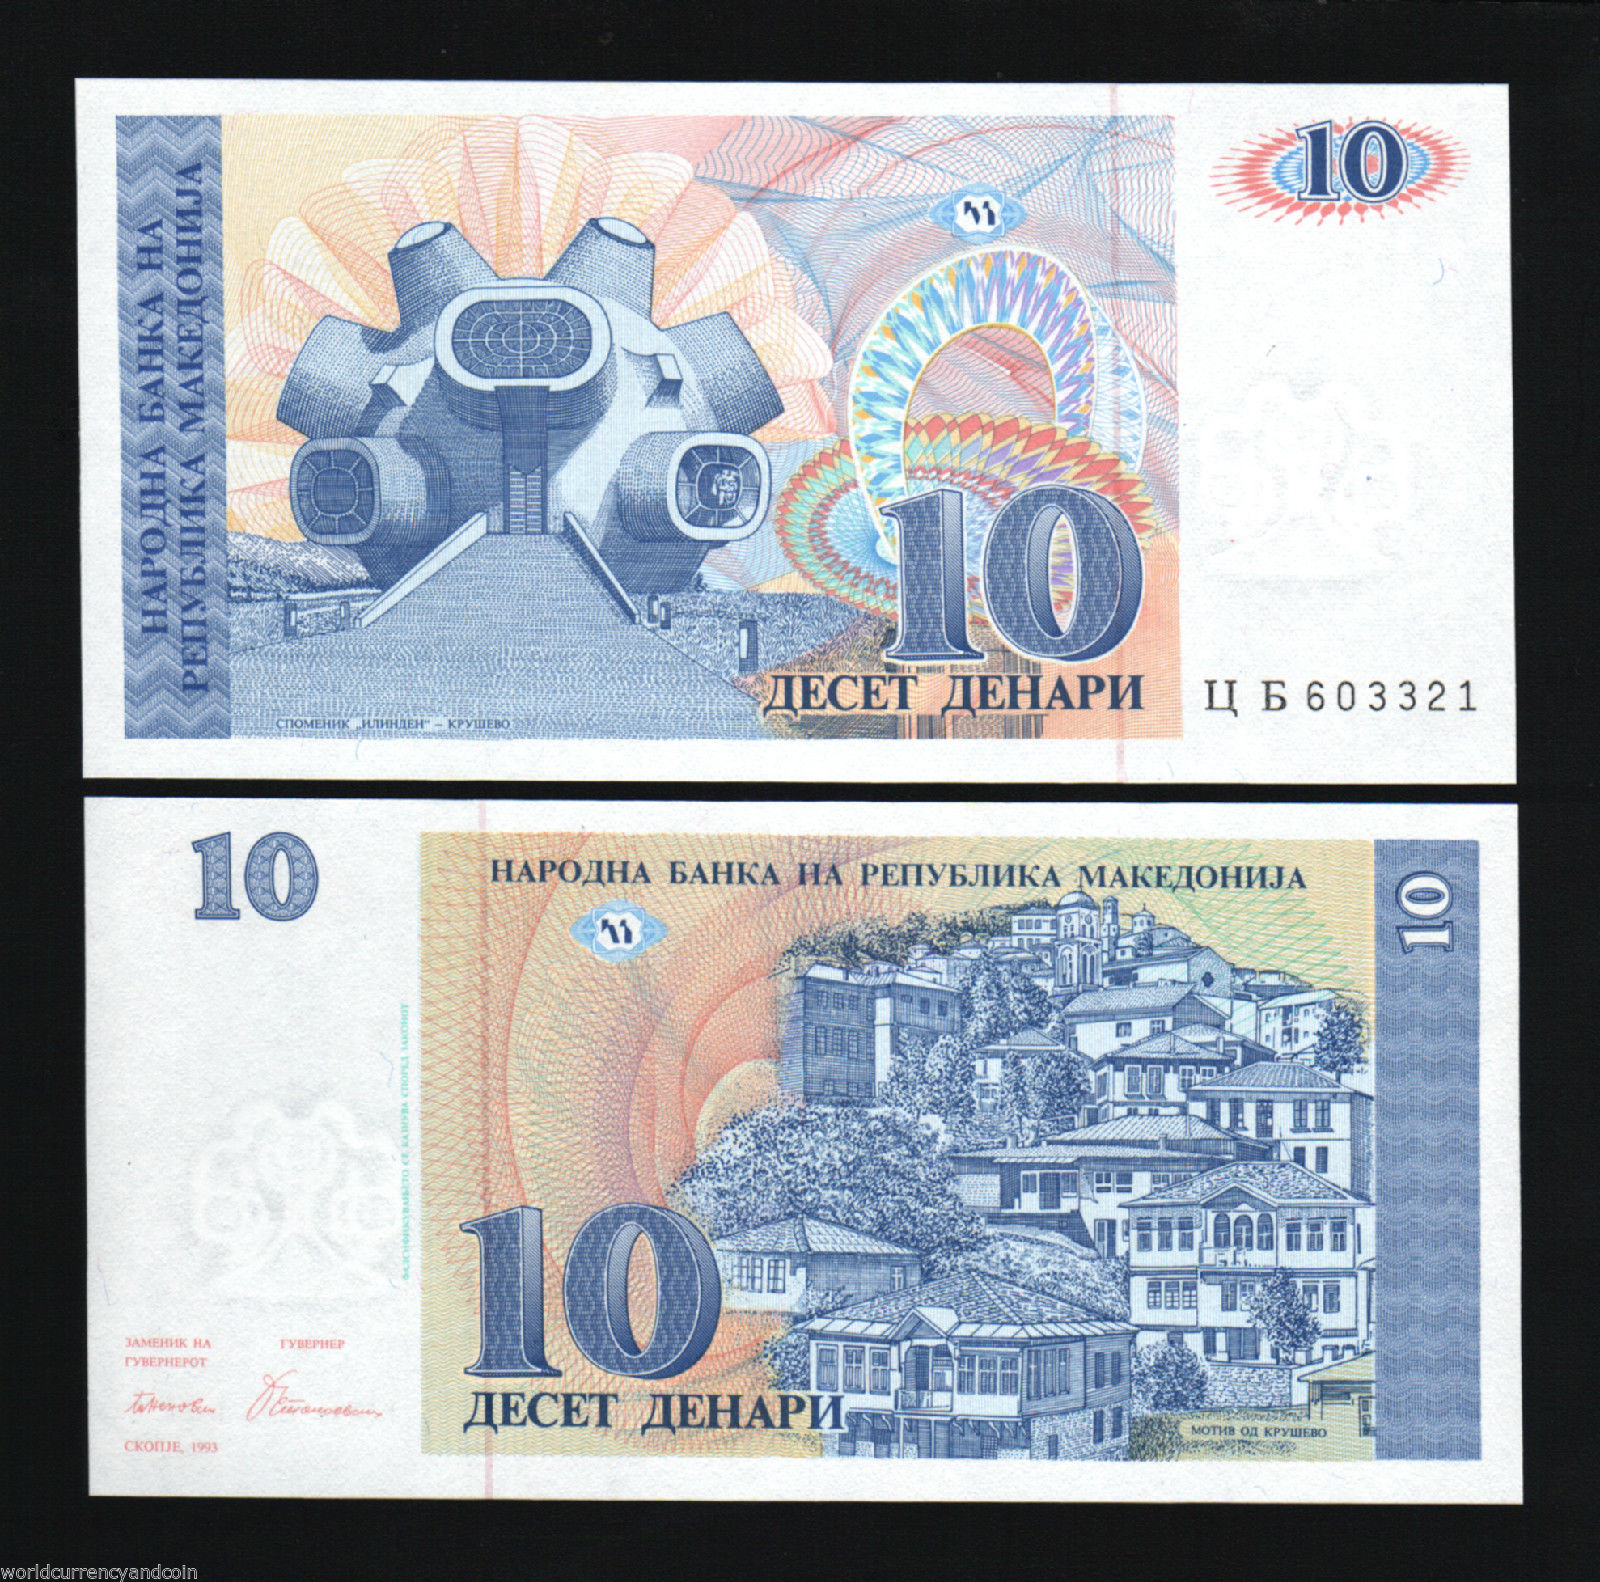 10 denari Macedonia 1993